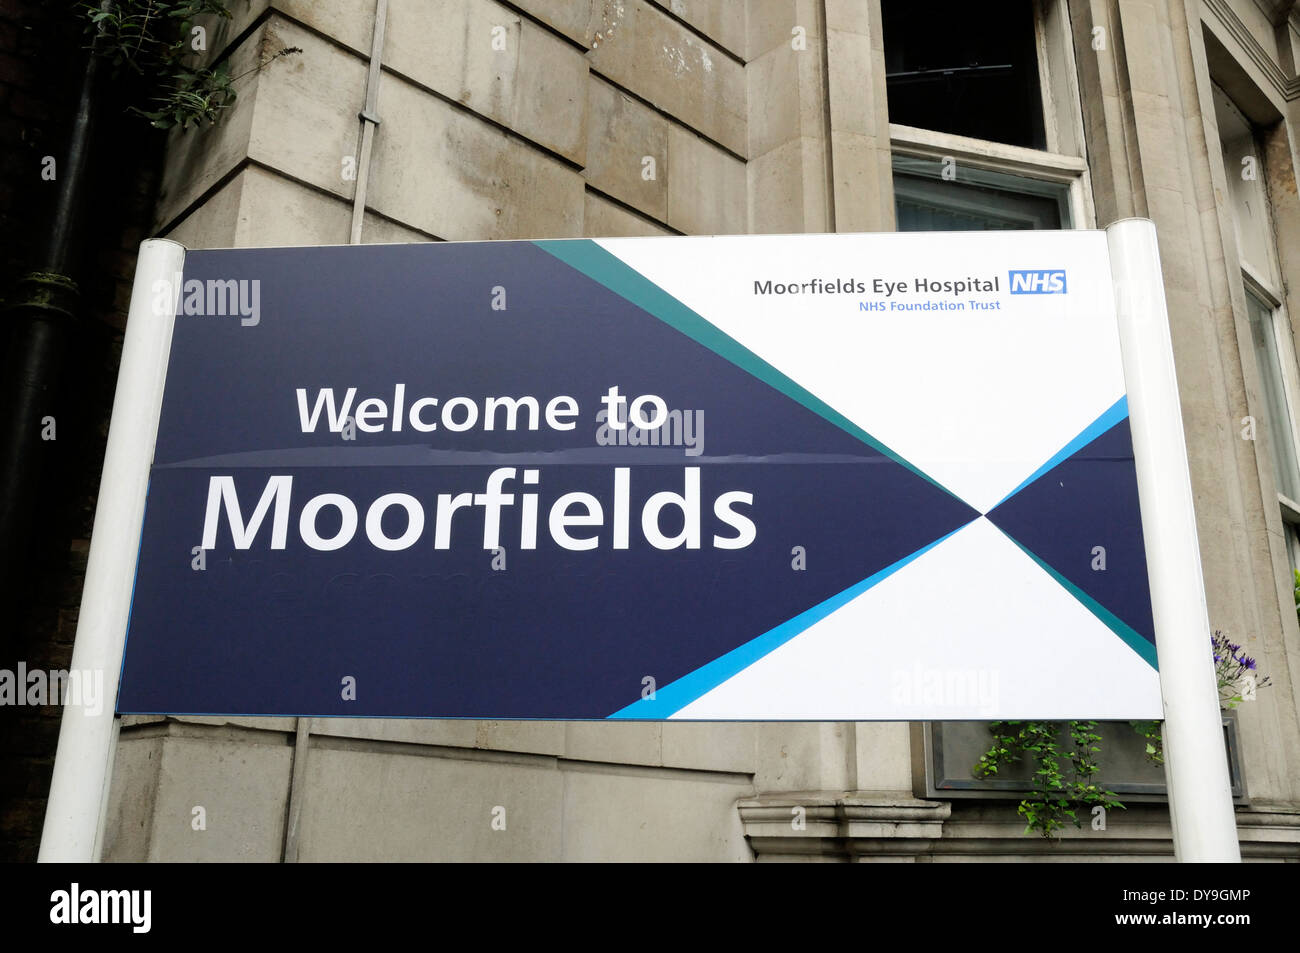 Welcome to Moorfields Eye Hospital sign, Old Street, London Borough of Islington England, UK Stock Photo